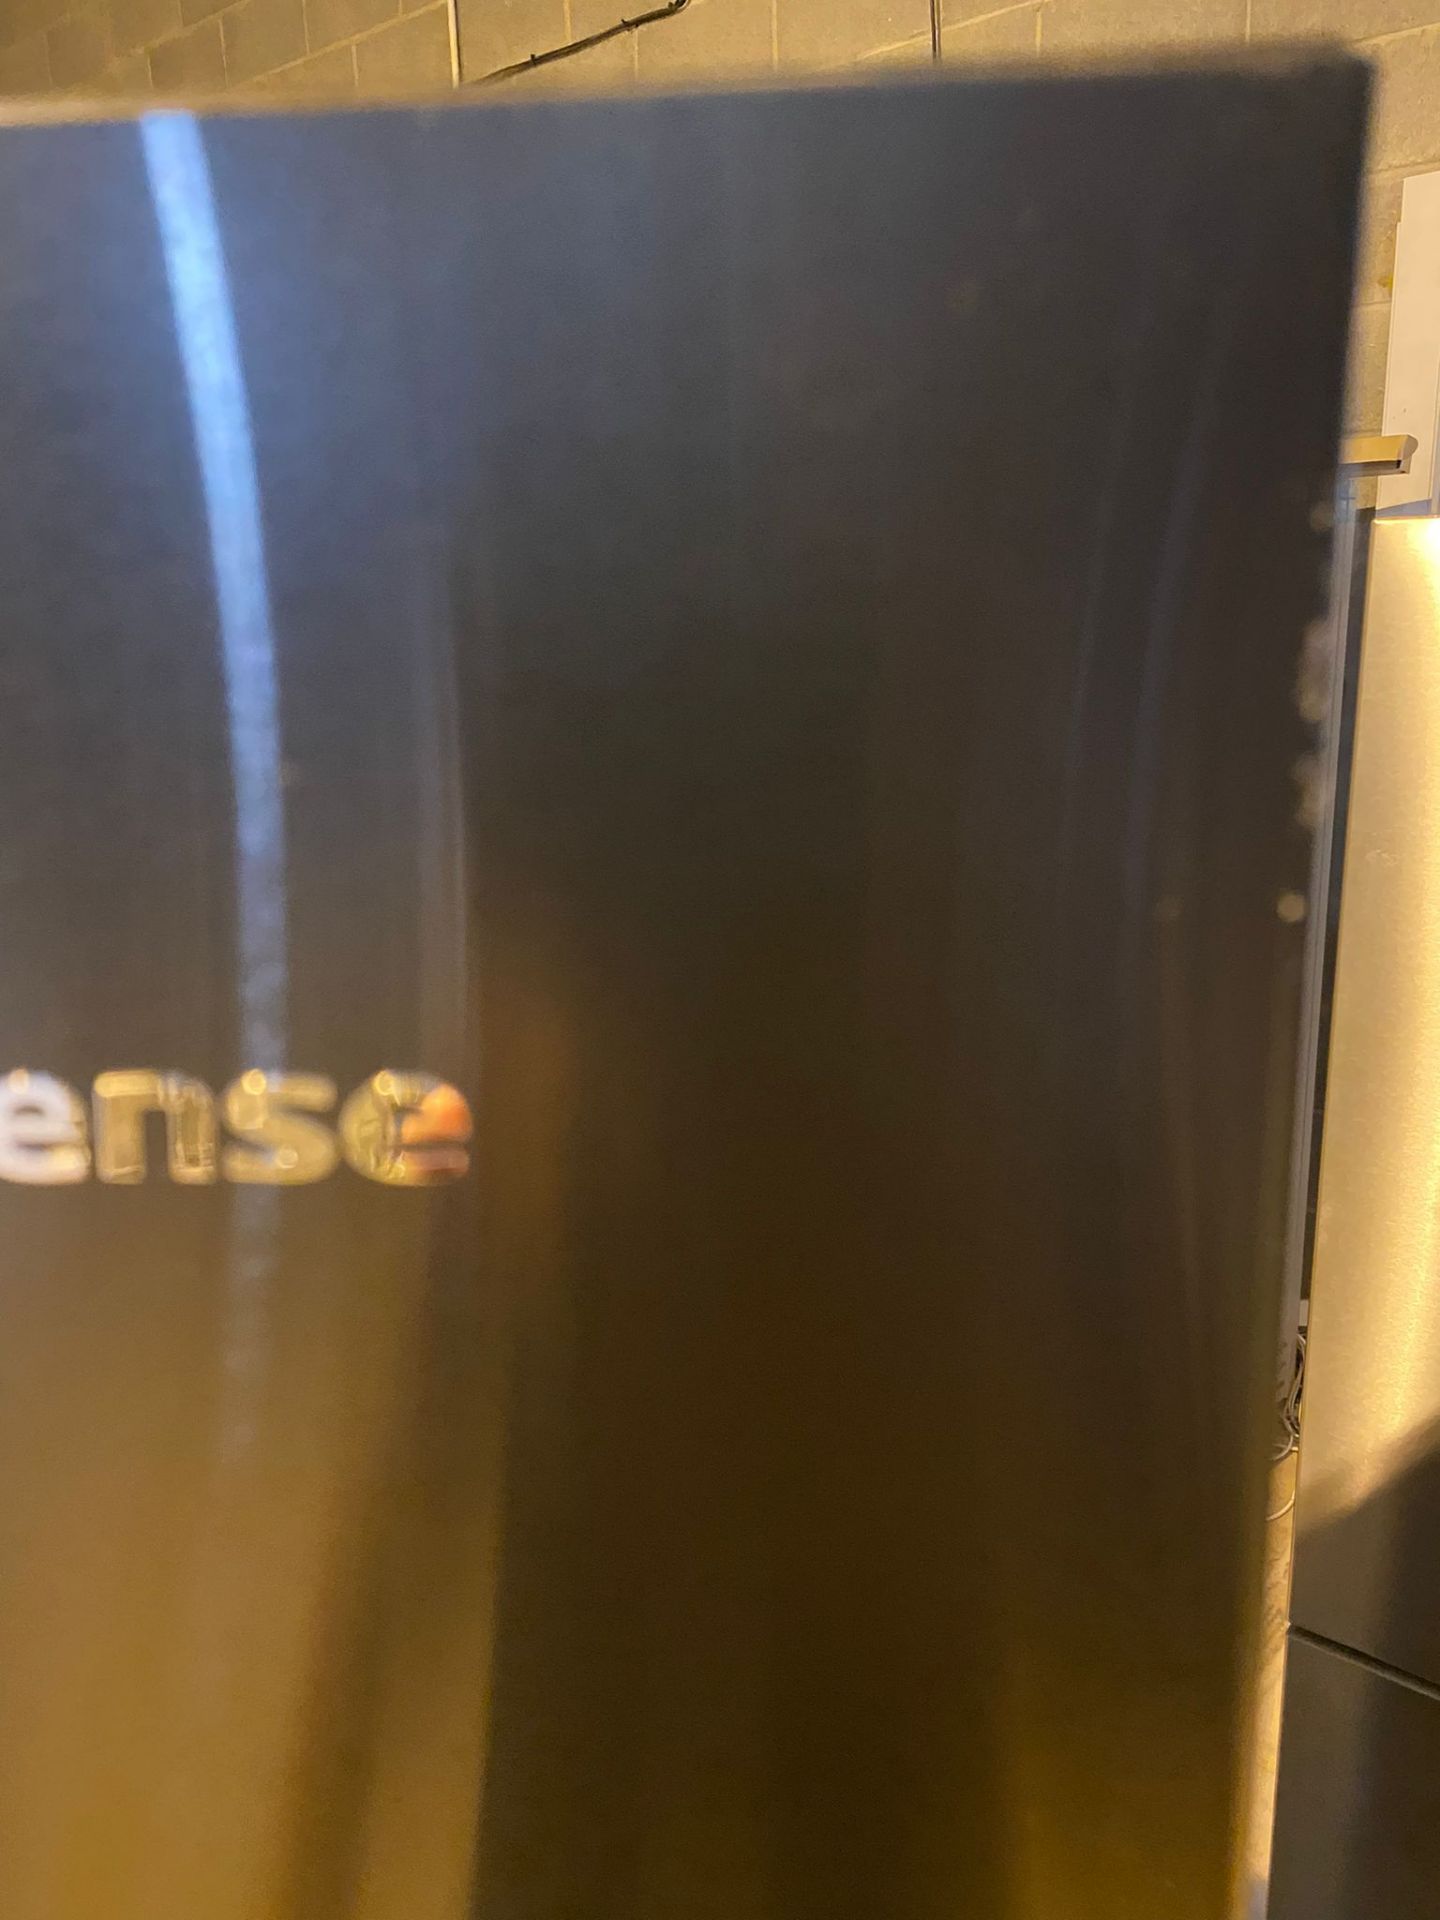 1 x HiSense RF540N4WF1 American Style Fridge Freezer With Black Steel Finish and Water Dispenser - - Image 4 of 7